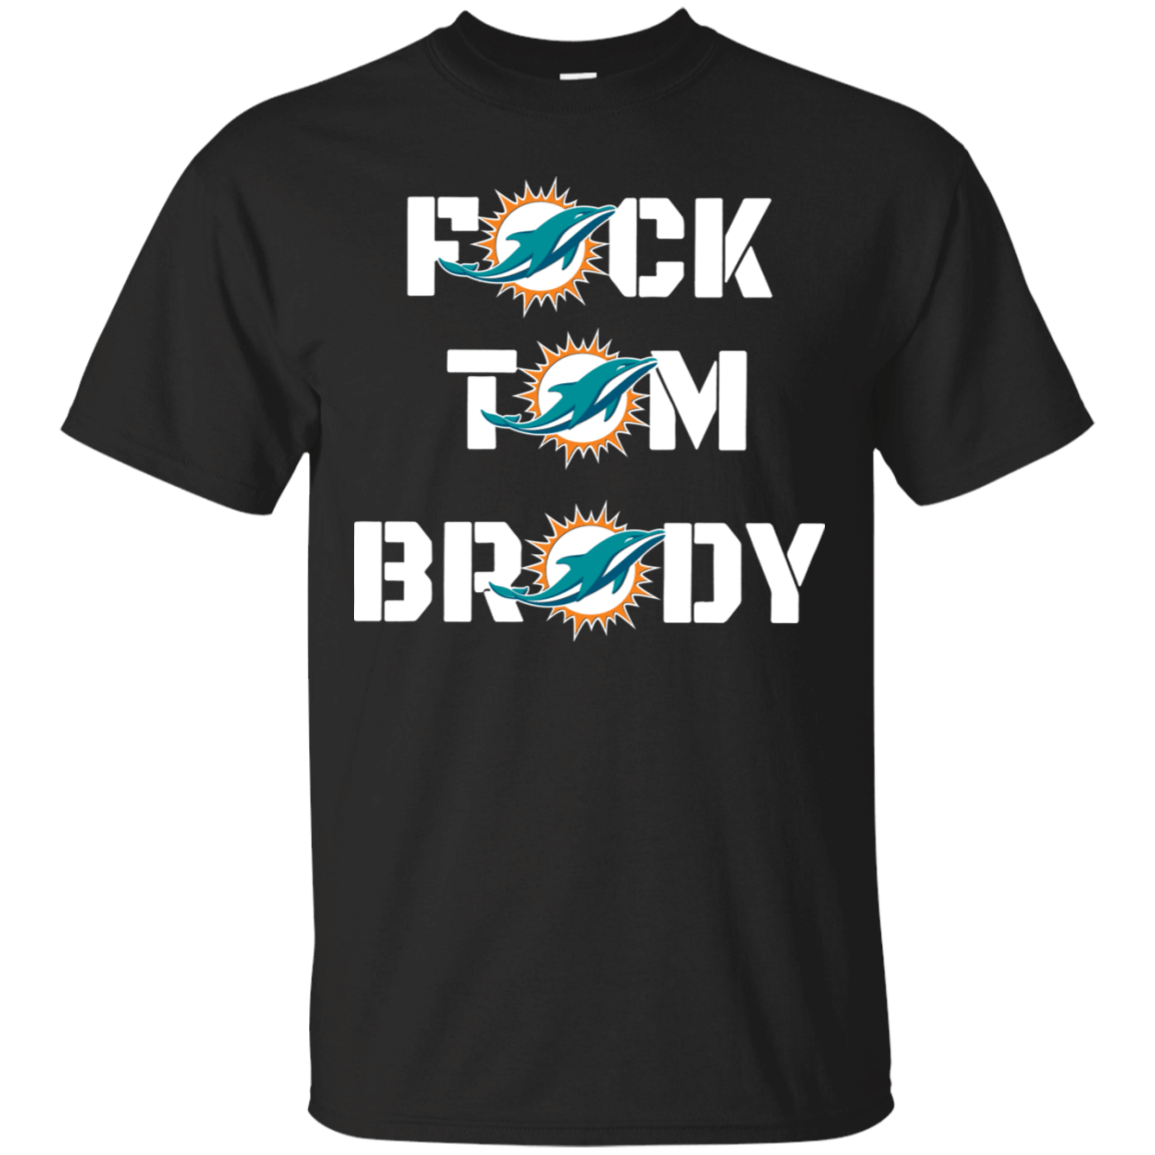 Miami Dolphins Shop - Miami Dolphins fck Tom Brady shirt Cotton Shirt